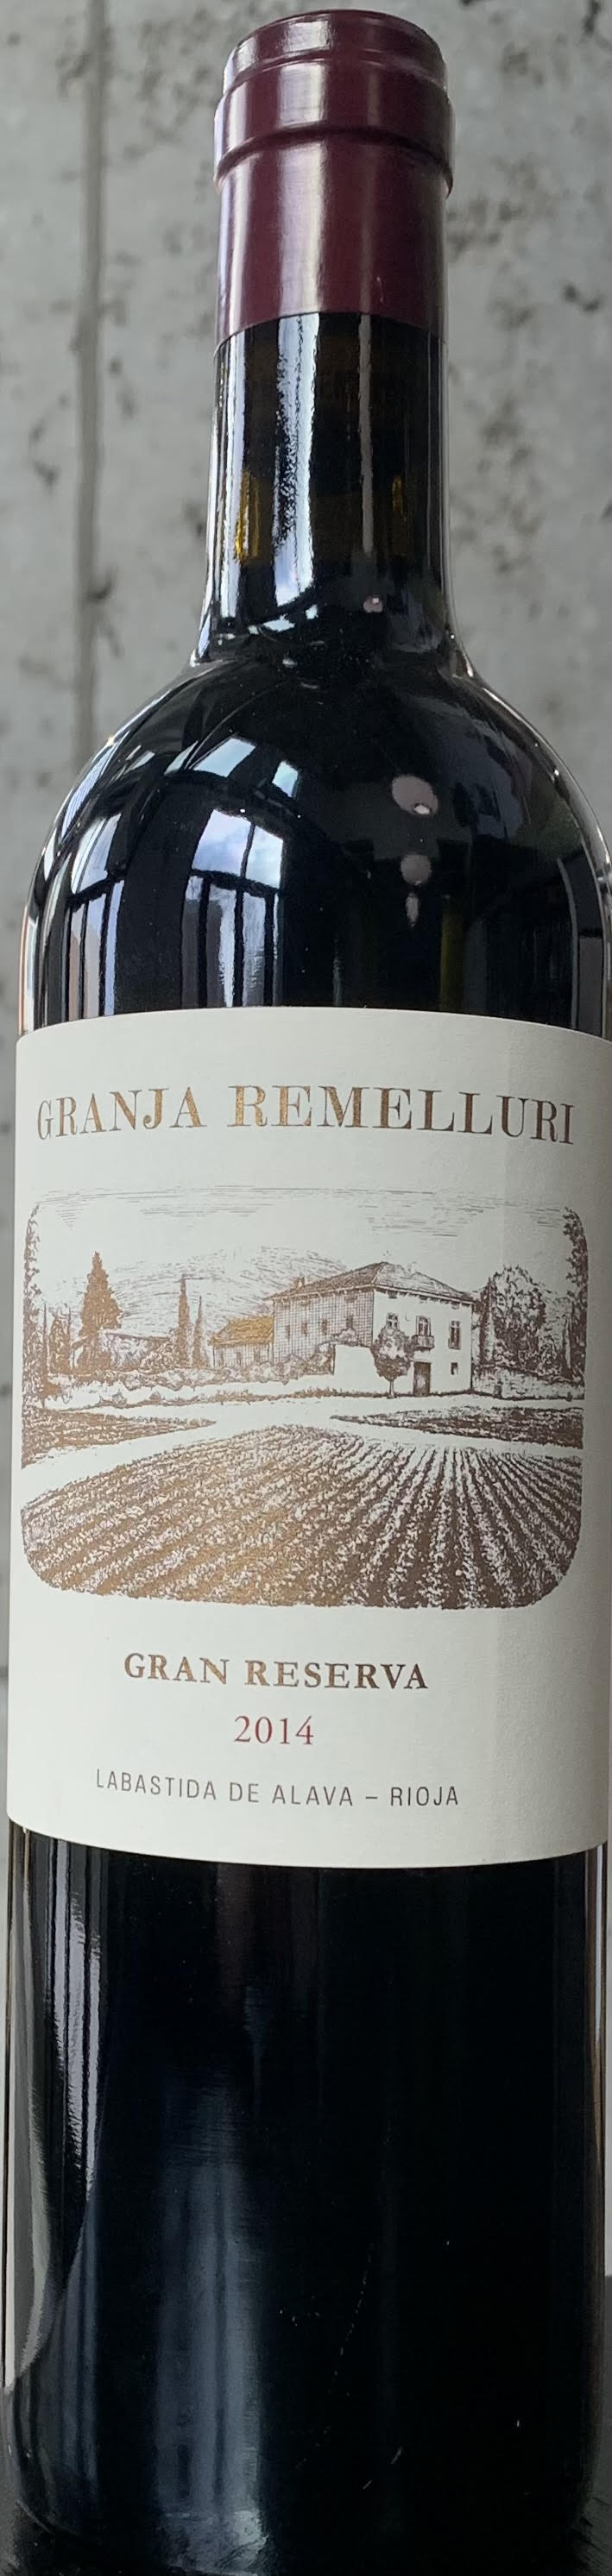 Remelluri Rioja Gran Reserva '14